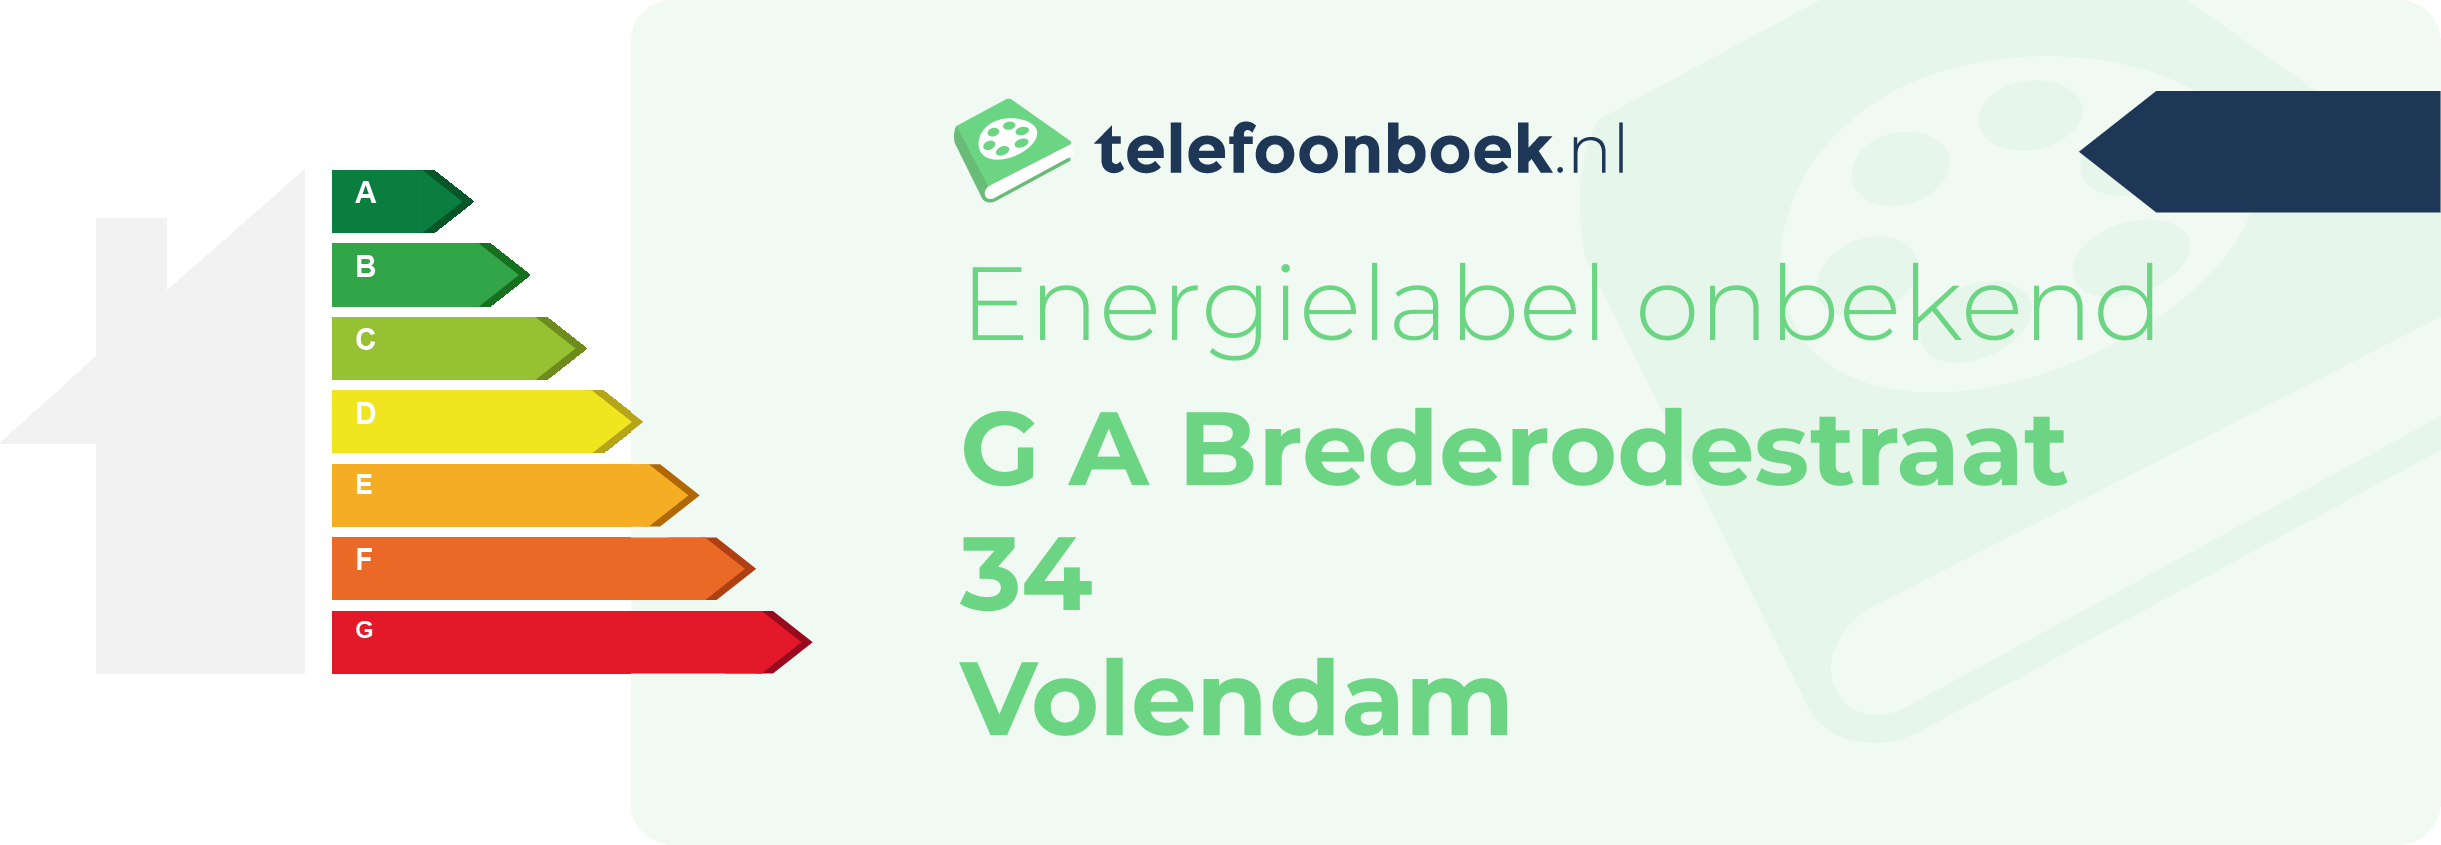 Energielabel G A Brederodestraat 34 Volendam